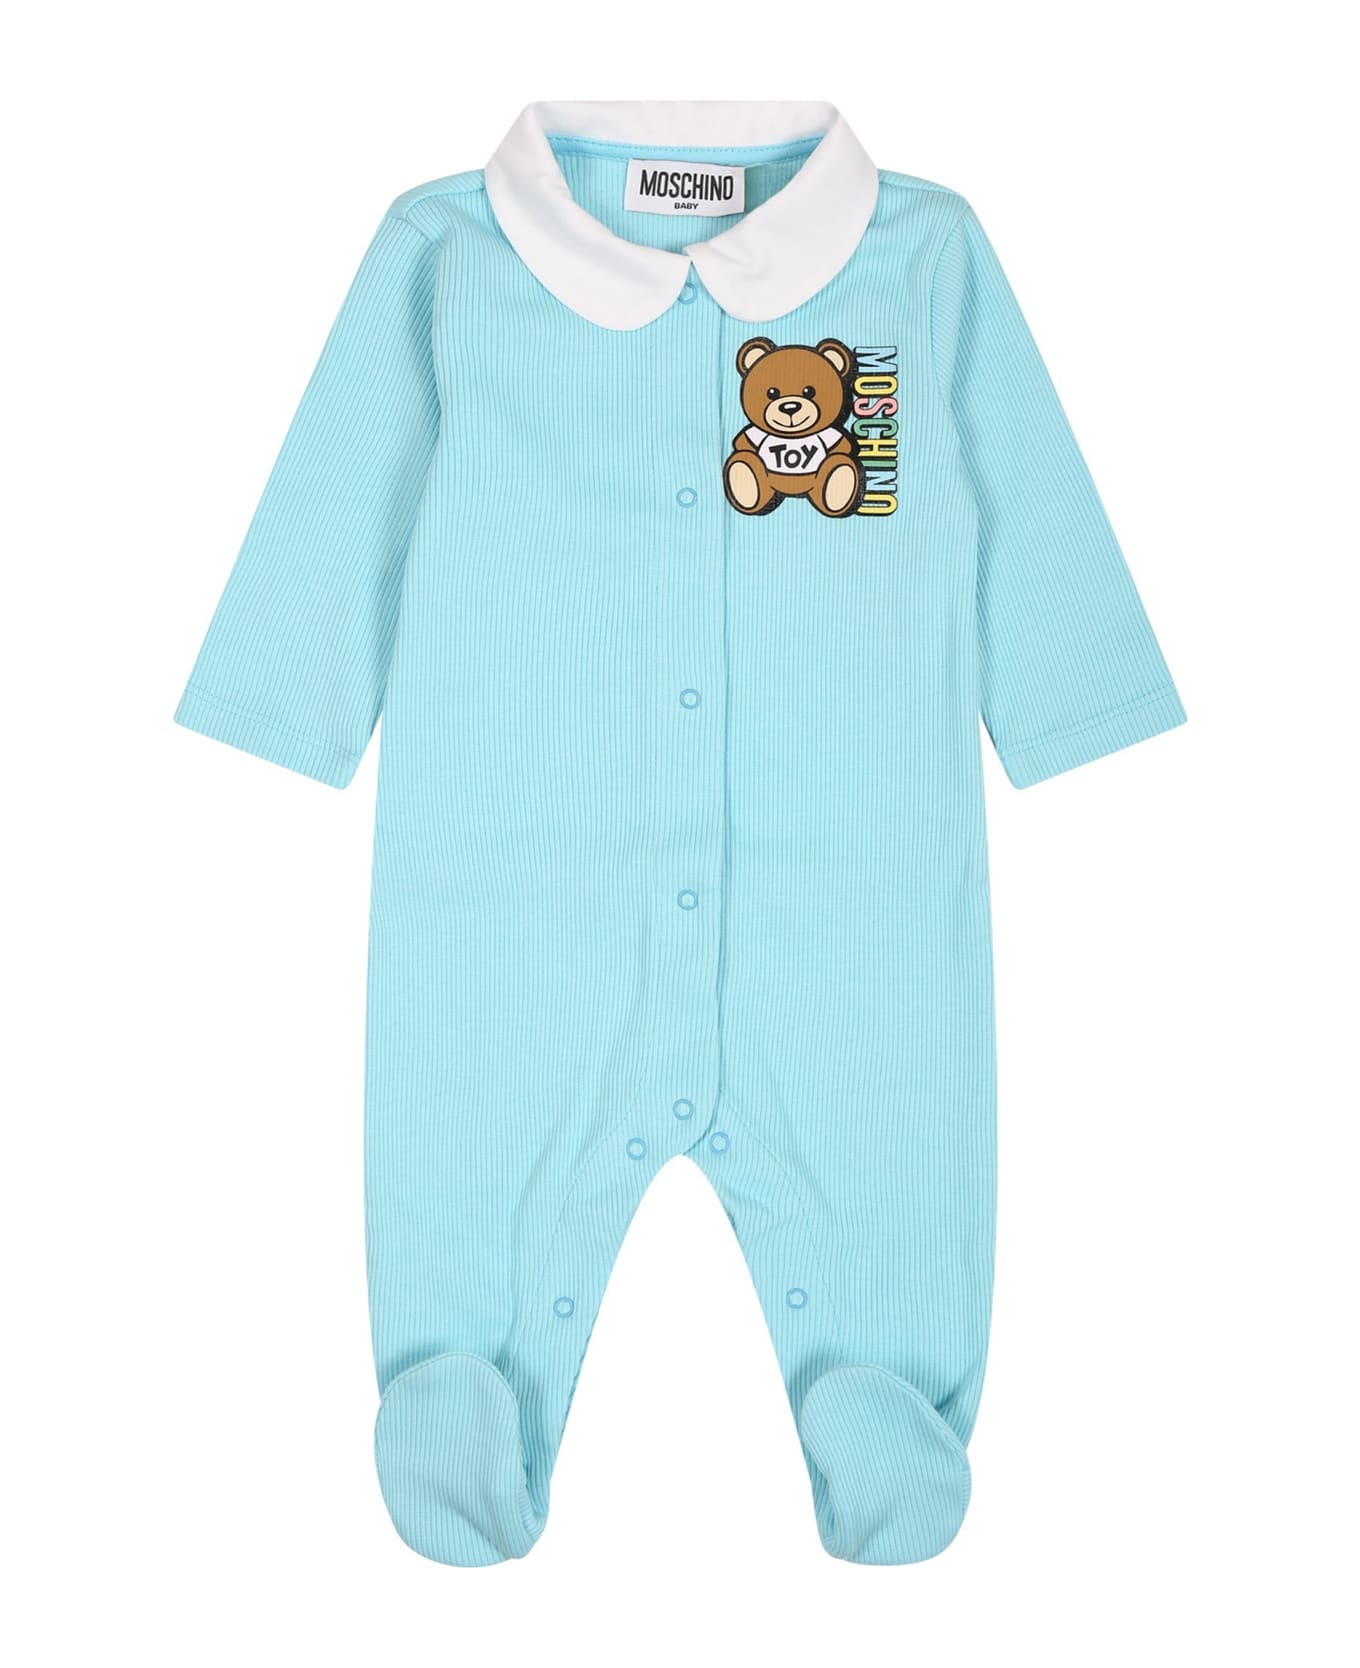 Moschino Light Blue Babygrow For Baby Boy With Teddy Bear And Logo - Light Blue